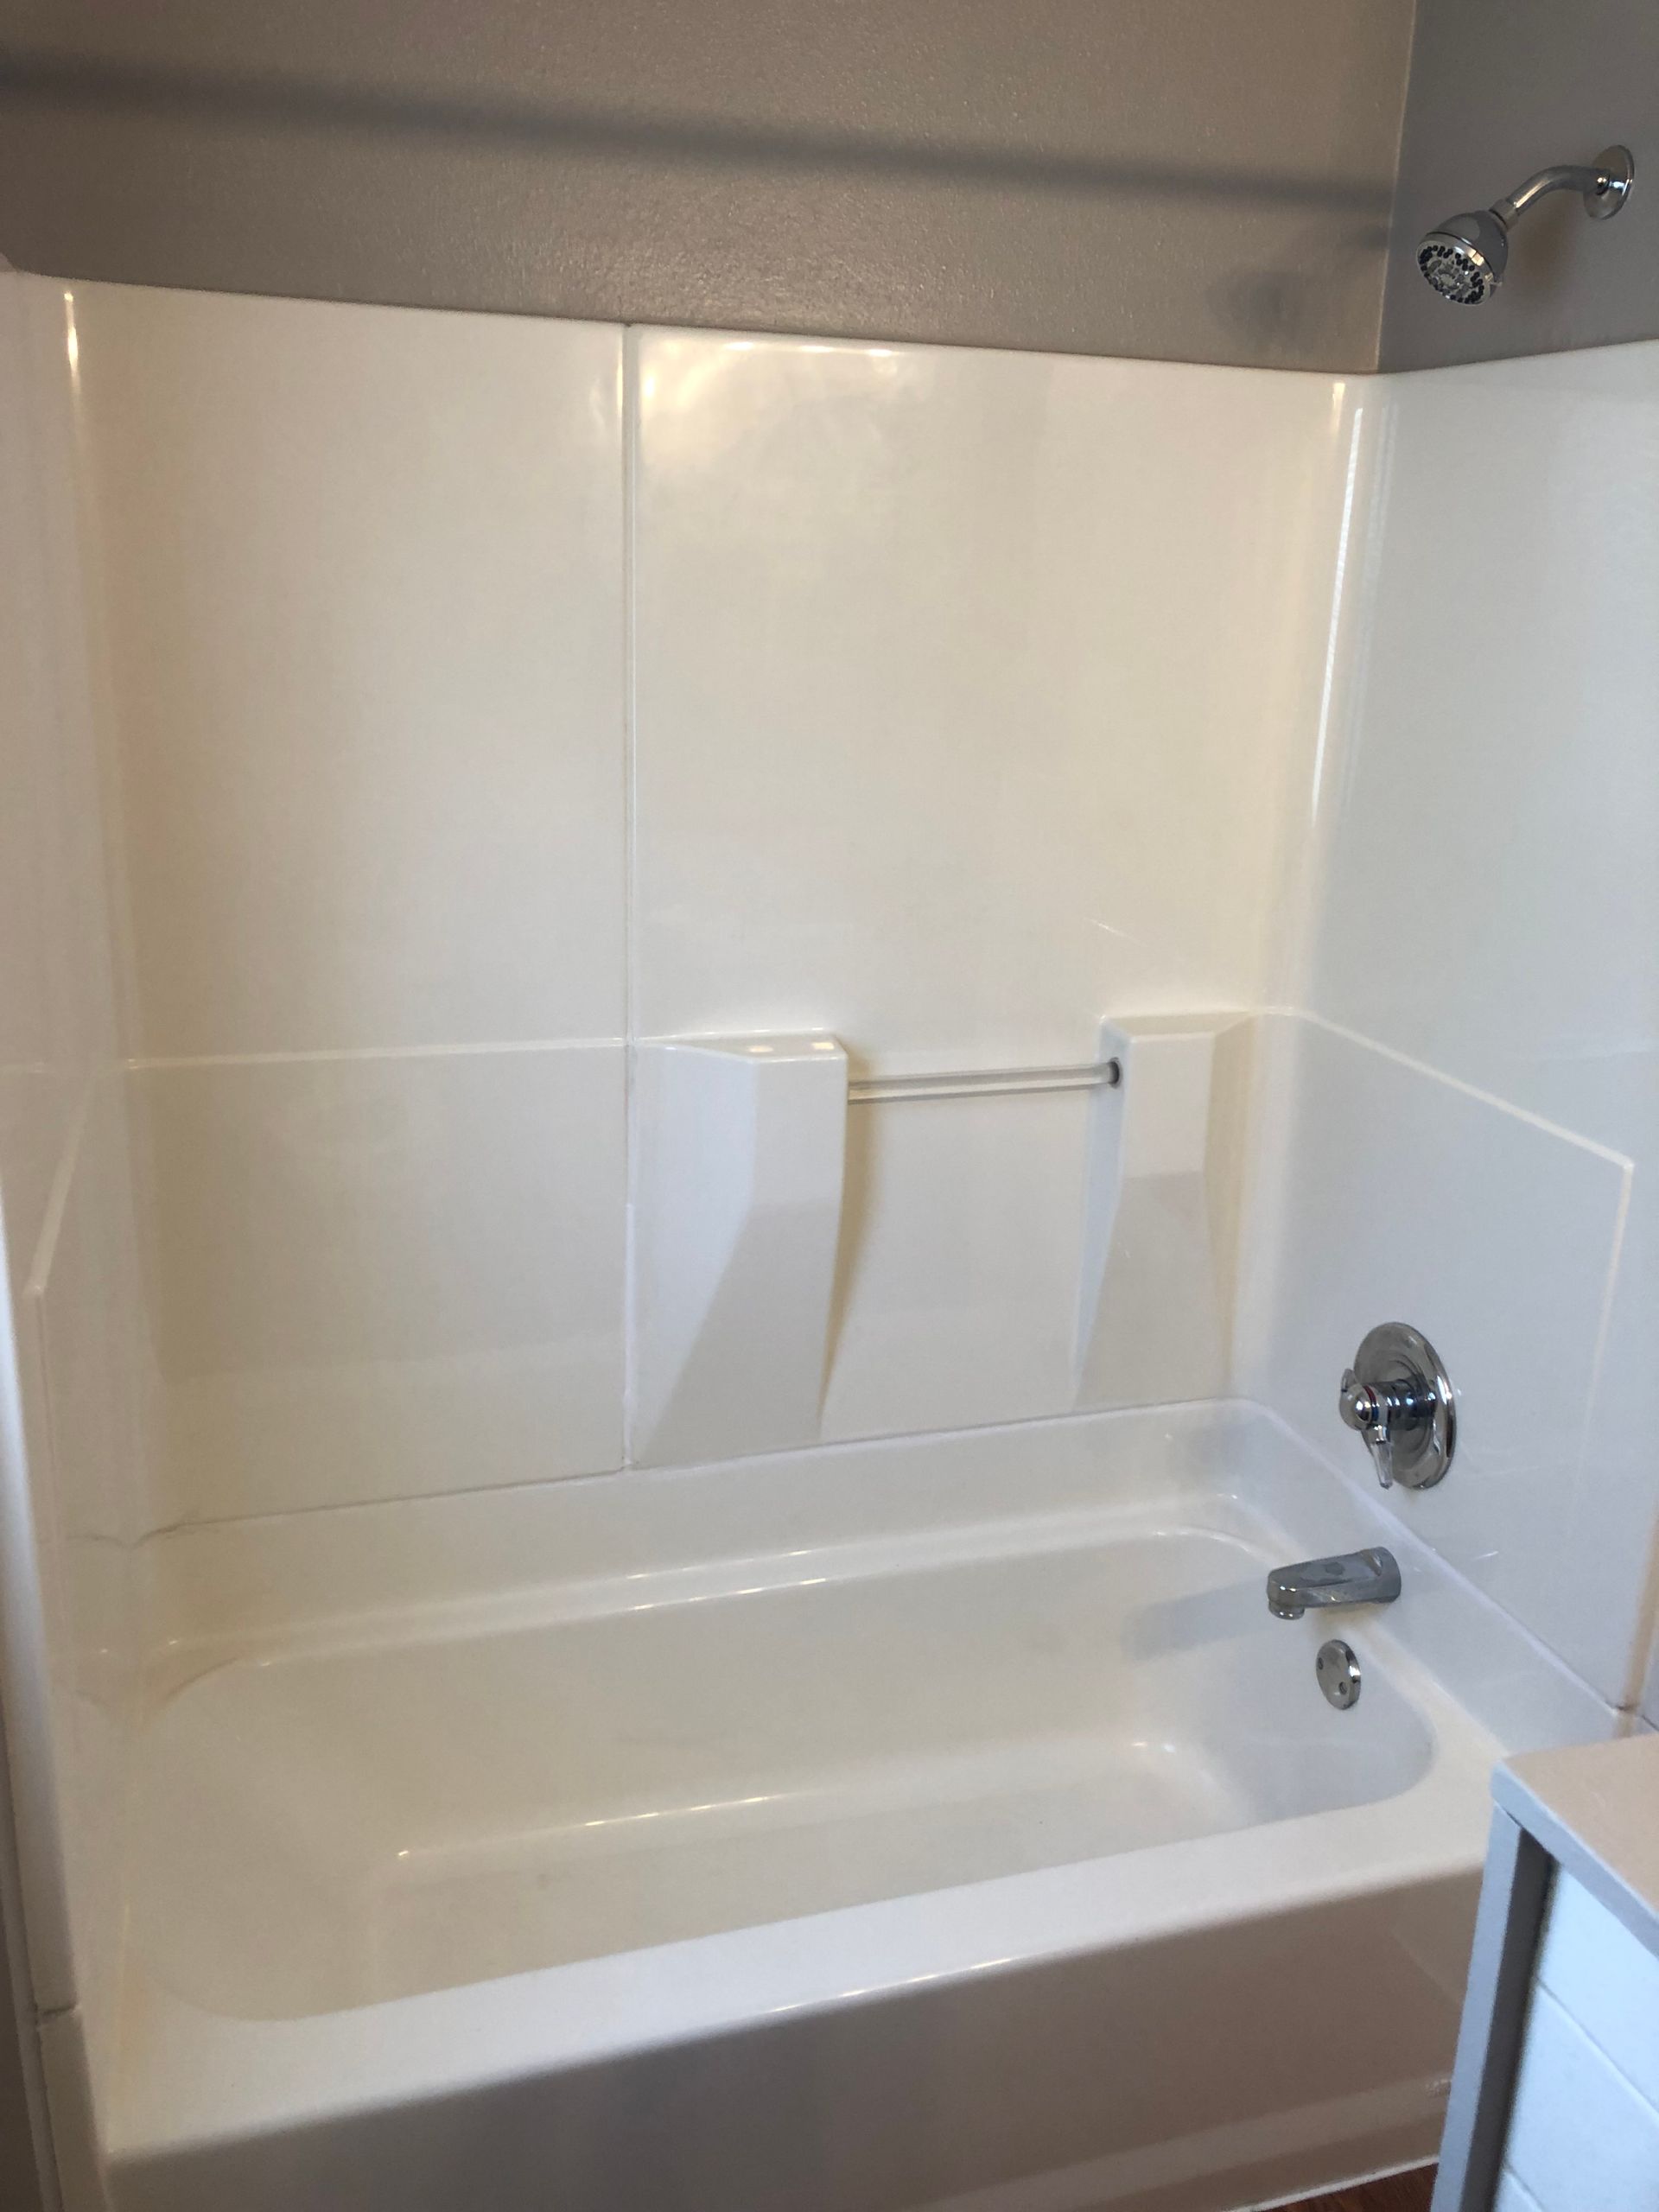 A white bathtub in a bathroom with white tiles